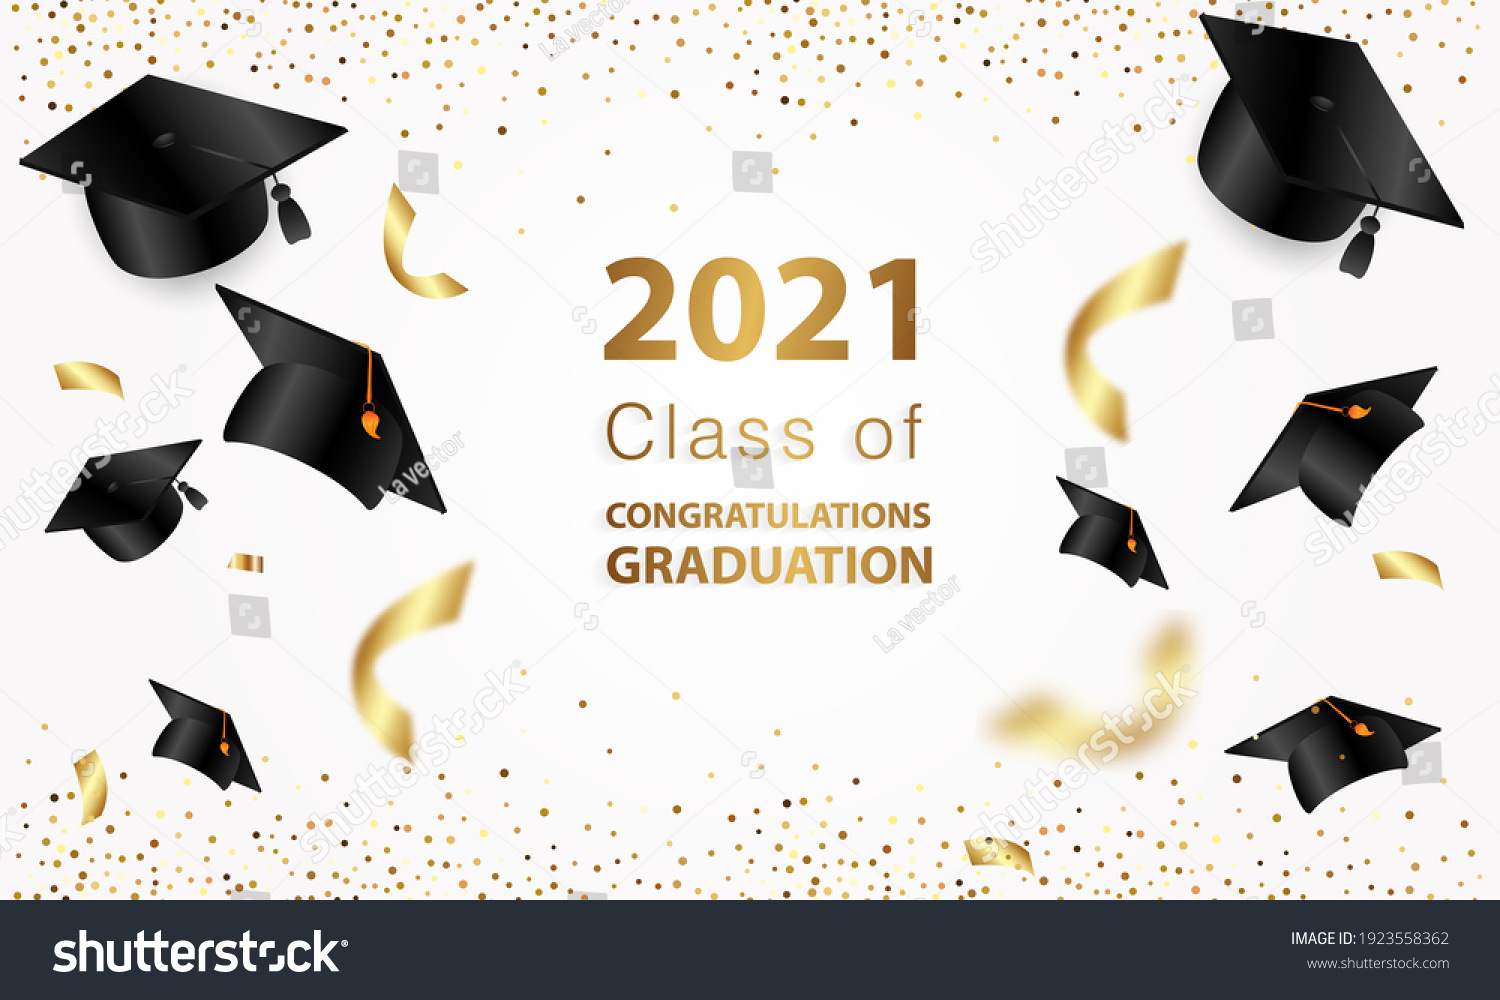 Congratulation on your graduation